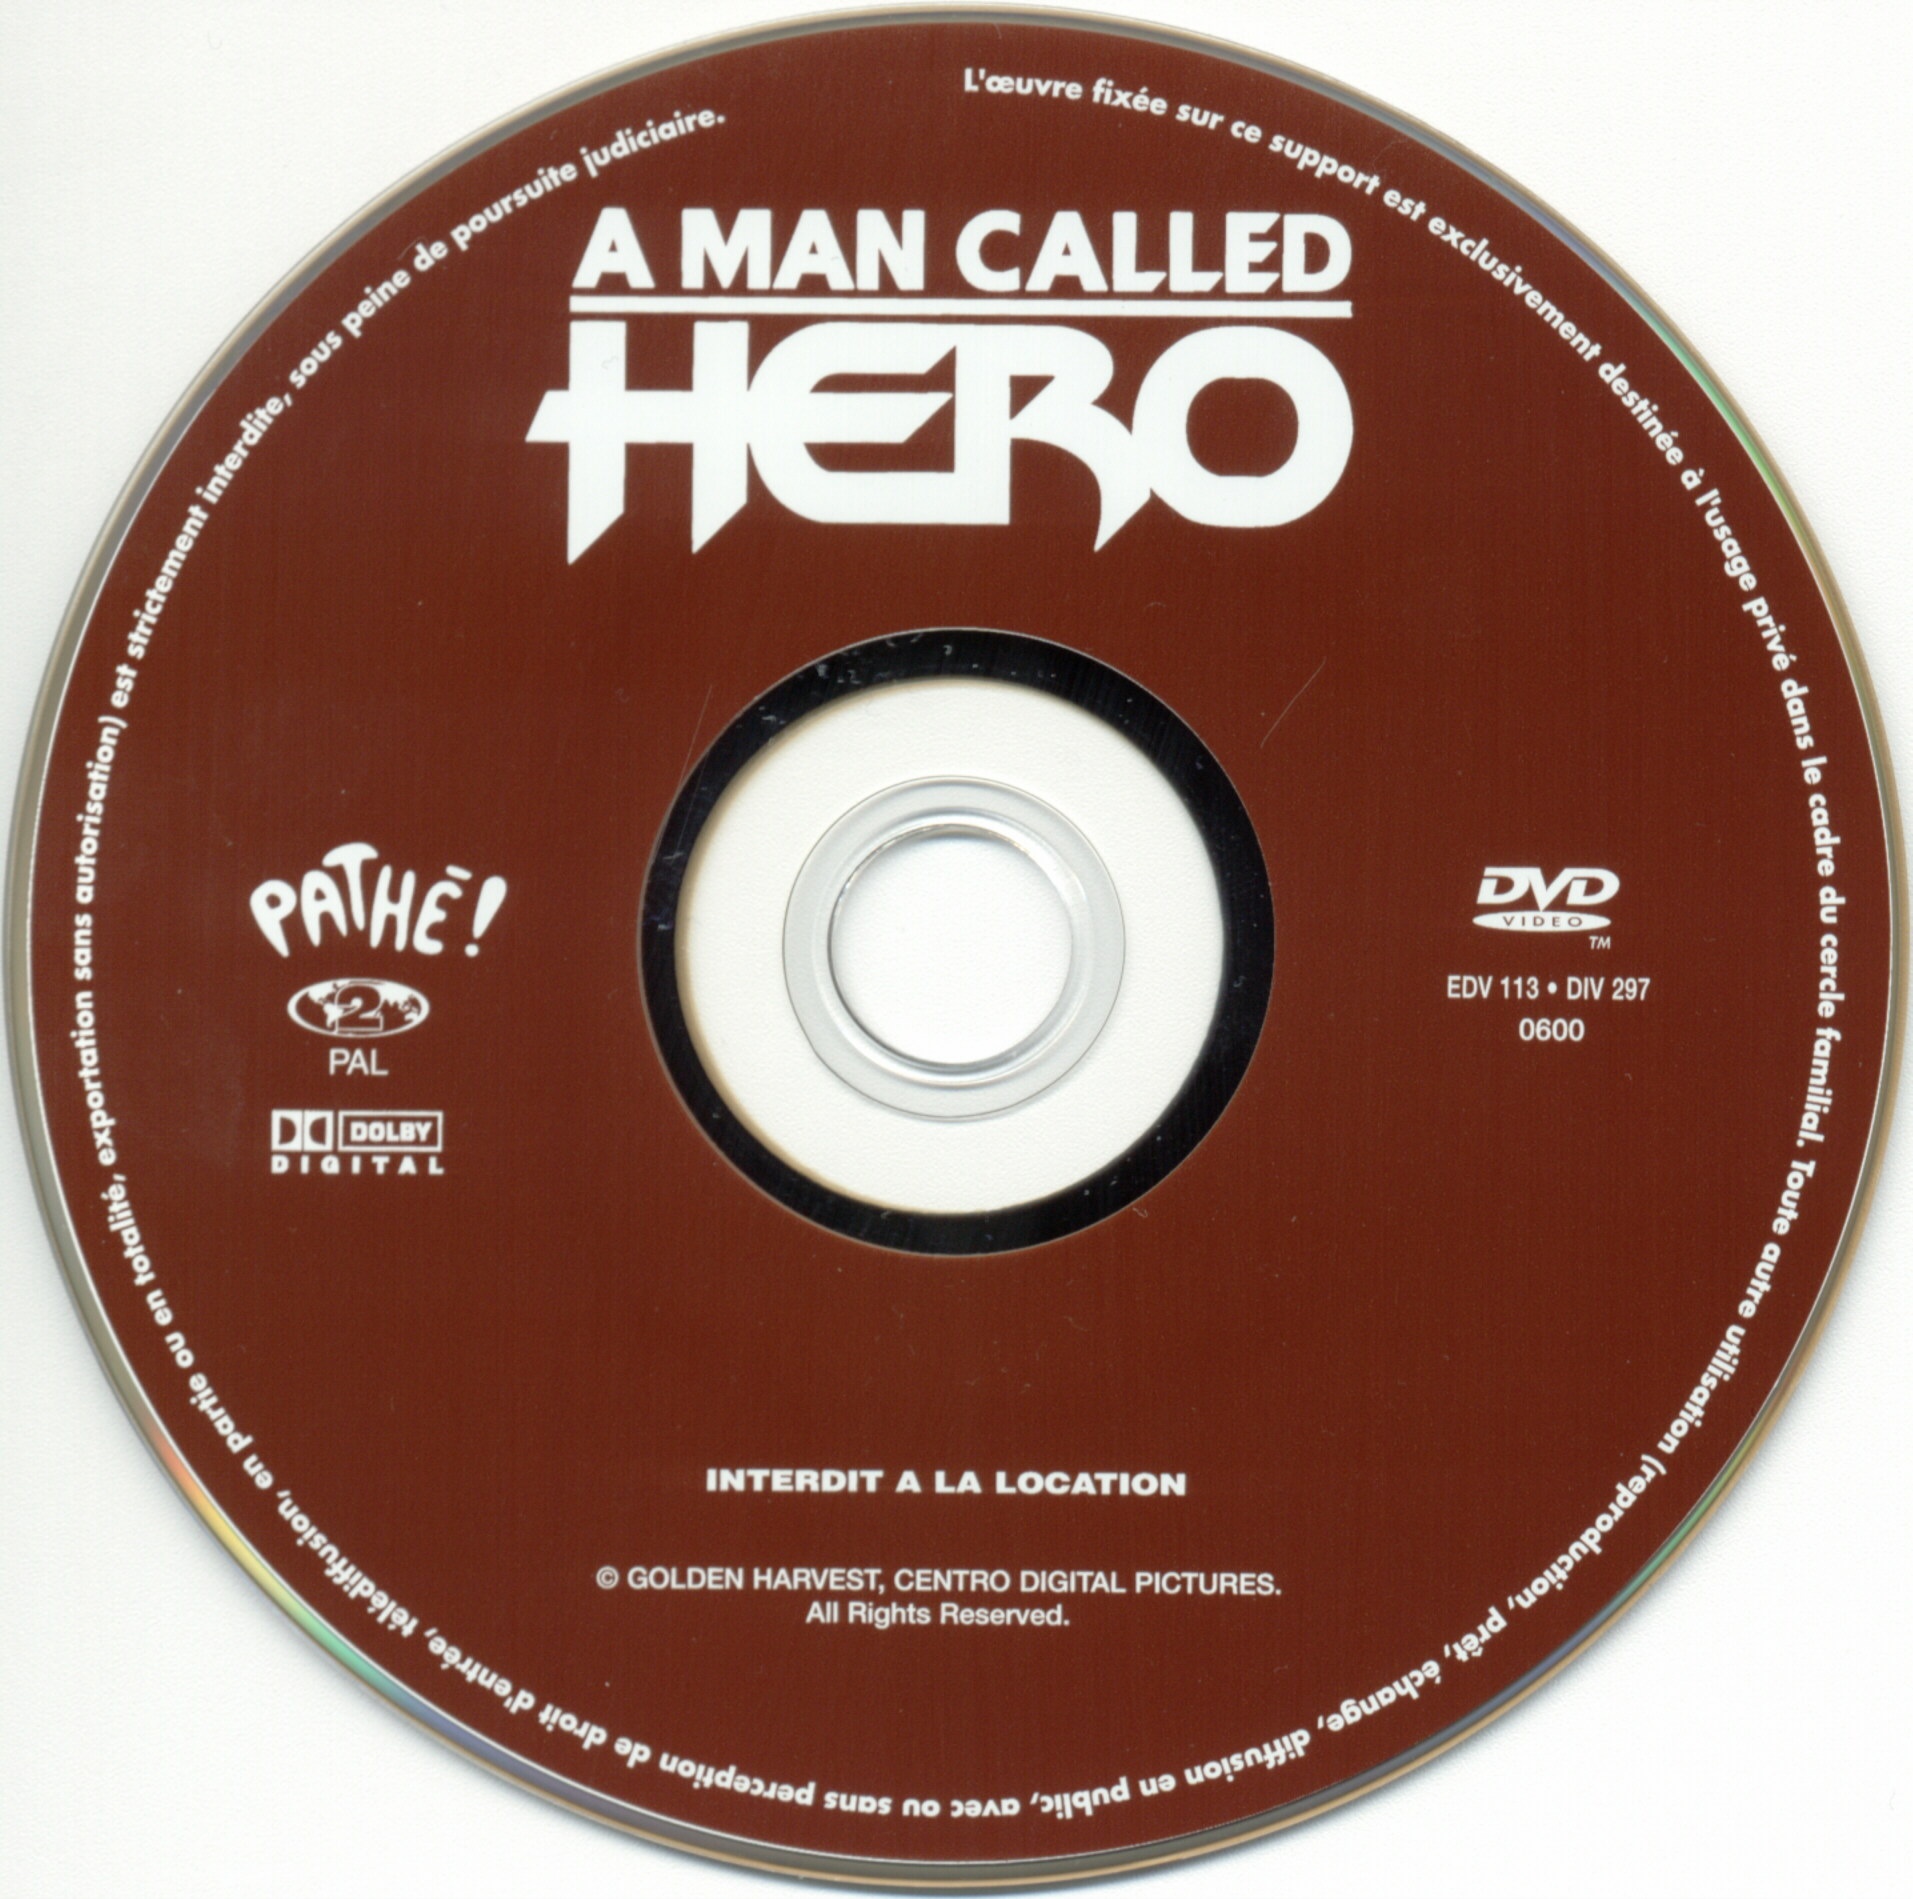 A man called hero